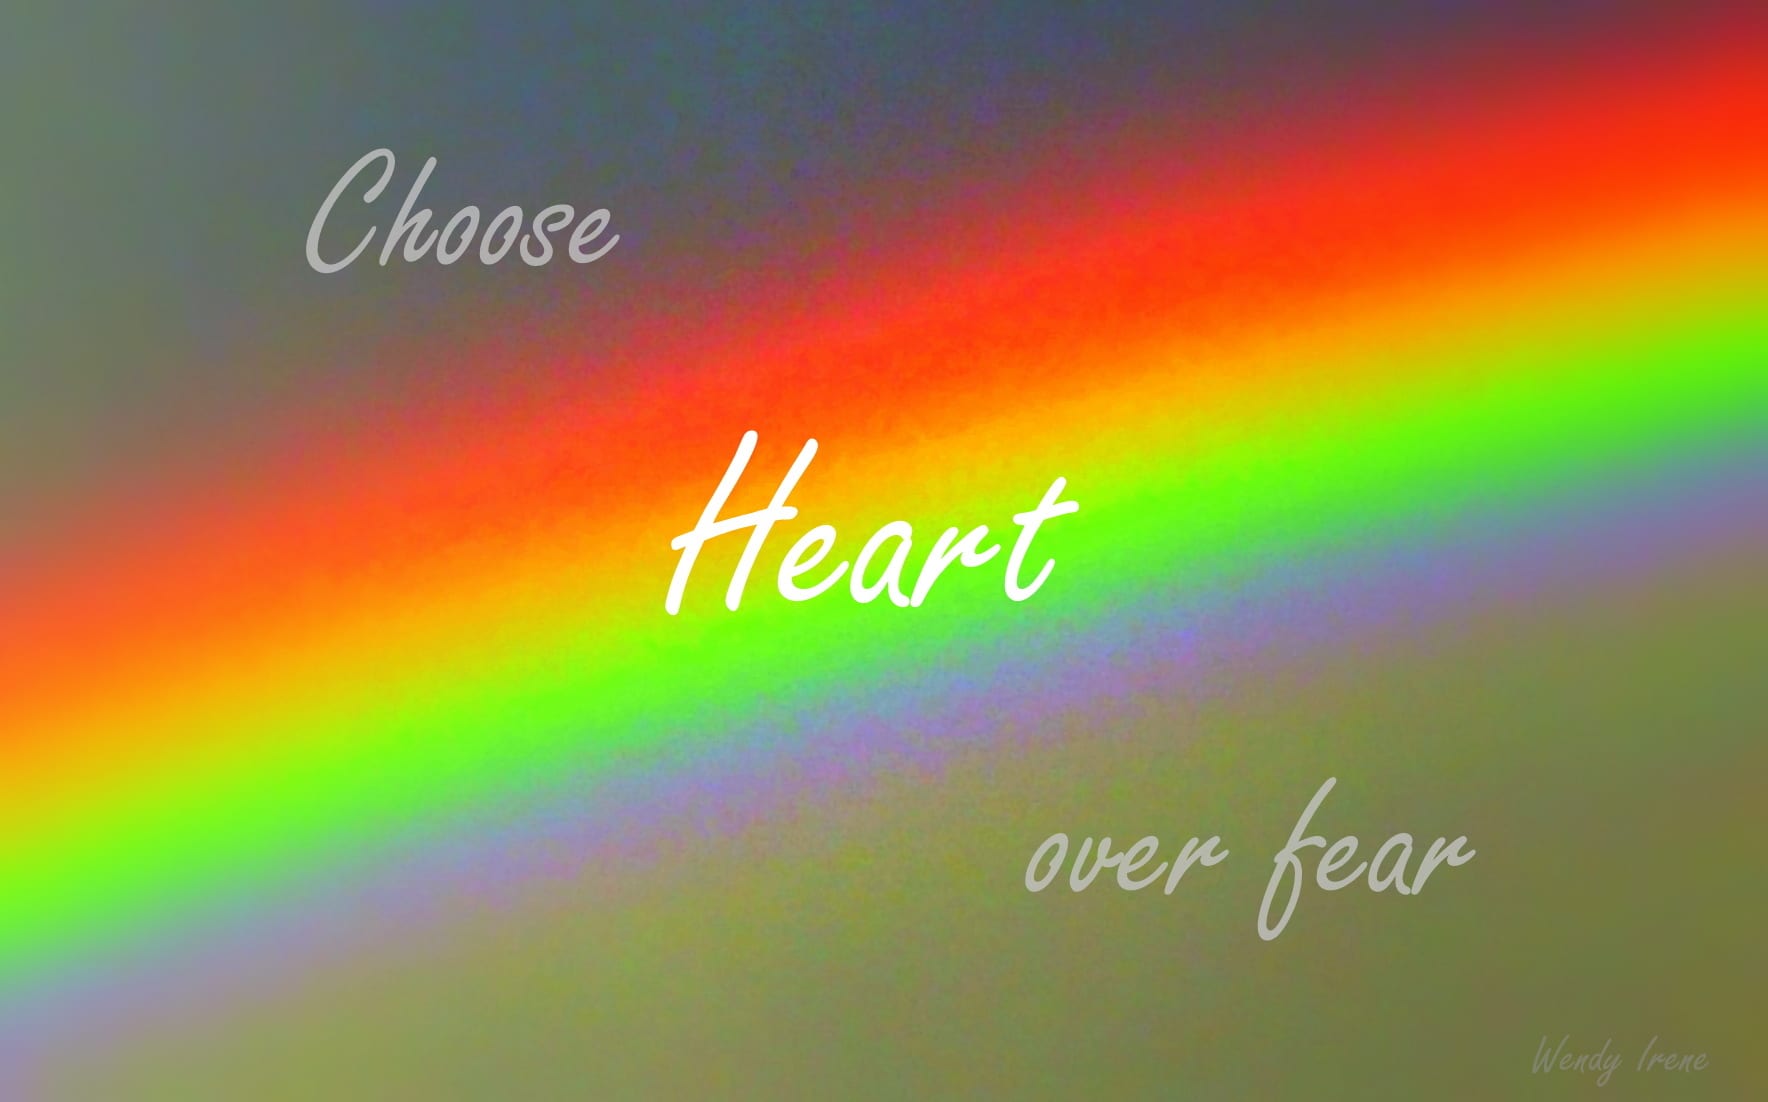 Choose Heart over Fear